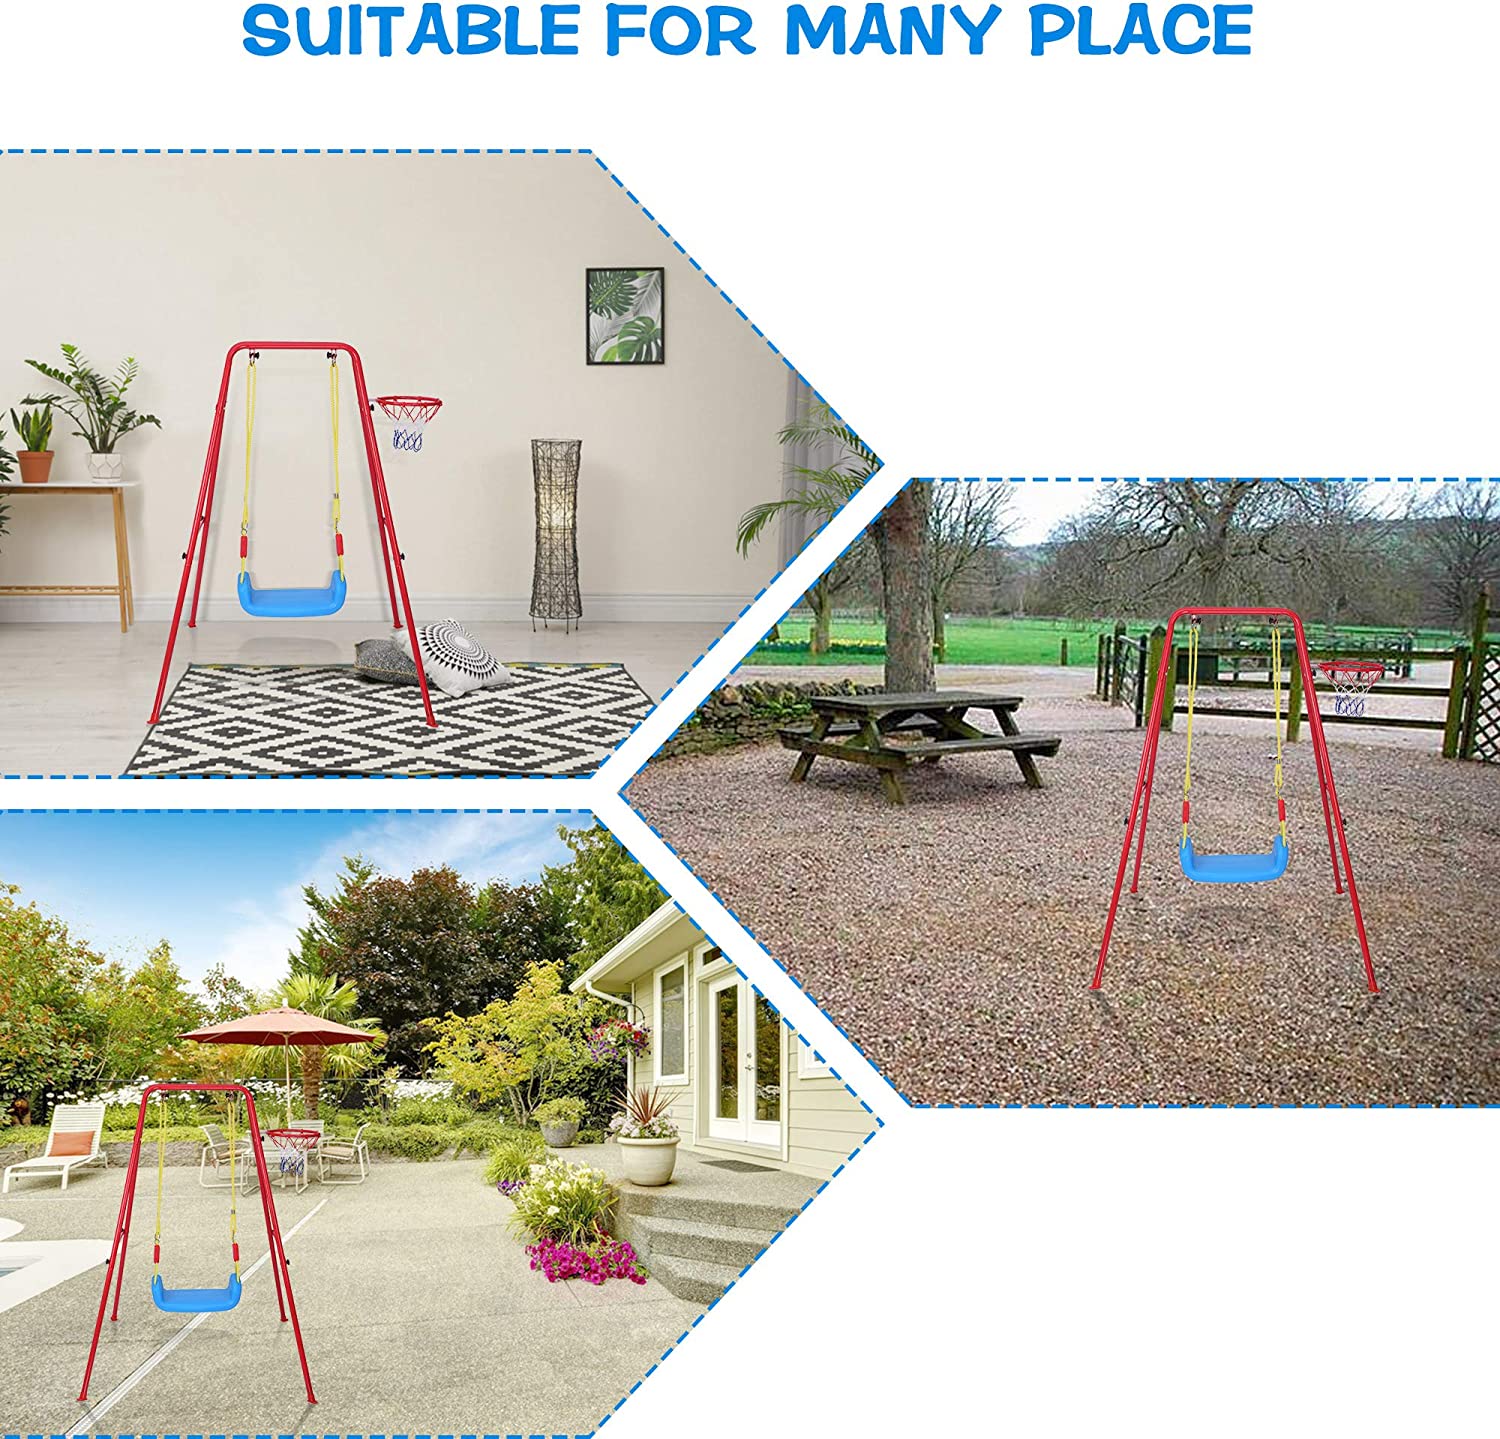 2 in 1 Metal Swing & Basketball Toddler Swing Set Kids Outdoor/Indoor Swing Seat Playset